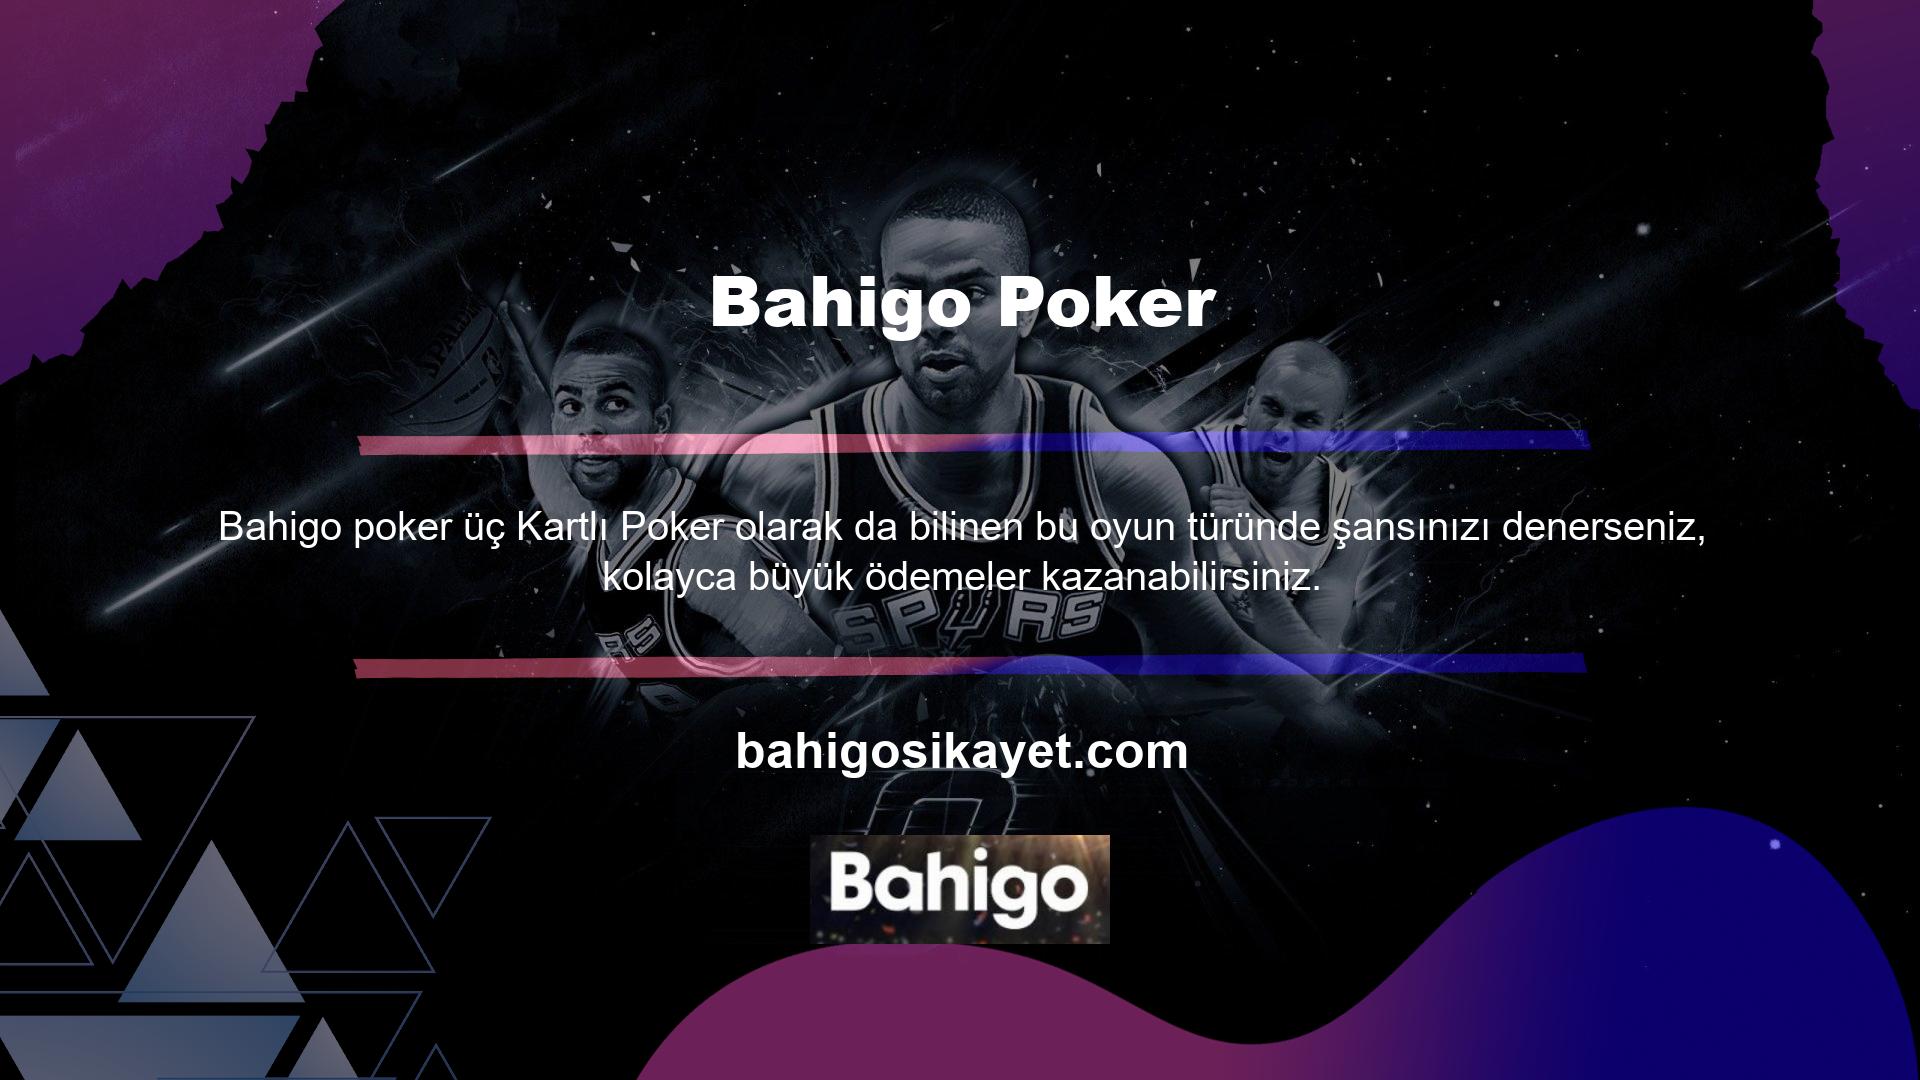 Bahigo Texas Hold'em, Bahigo Texas Hold'em Canlı Casino hizmetinin X-Pro Oyun programı tarafından sunulan oyunlardan biridir